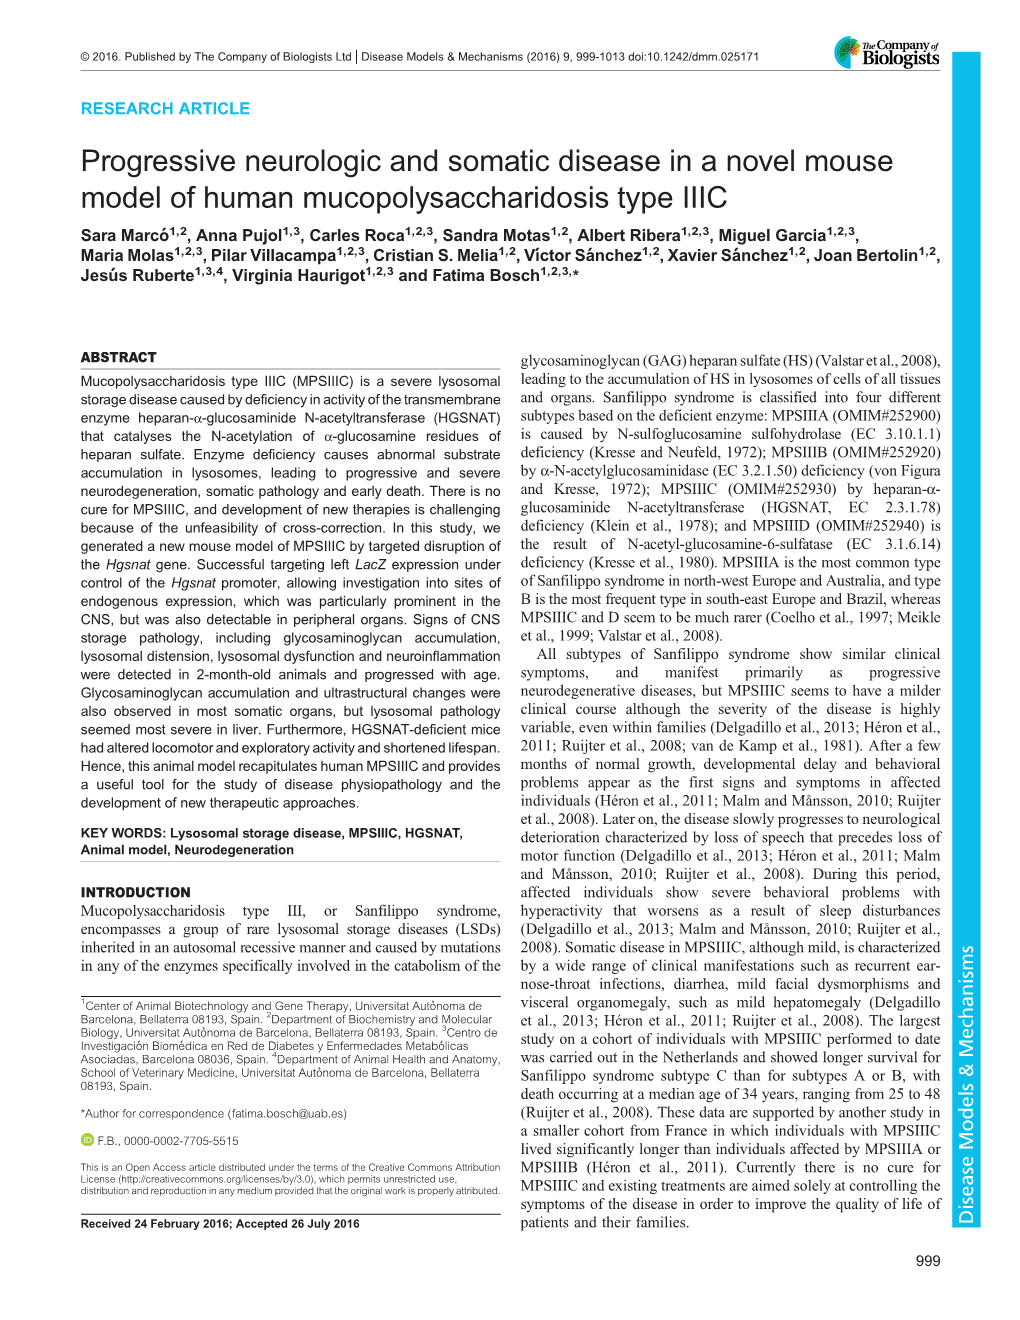 Progressive Neurologic and Somatic Disease in a Novel Mouse Model of Human Mucopolysaccharidosis Type IIIC